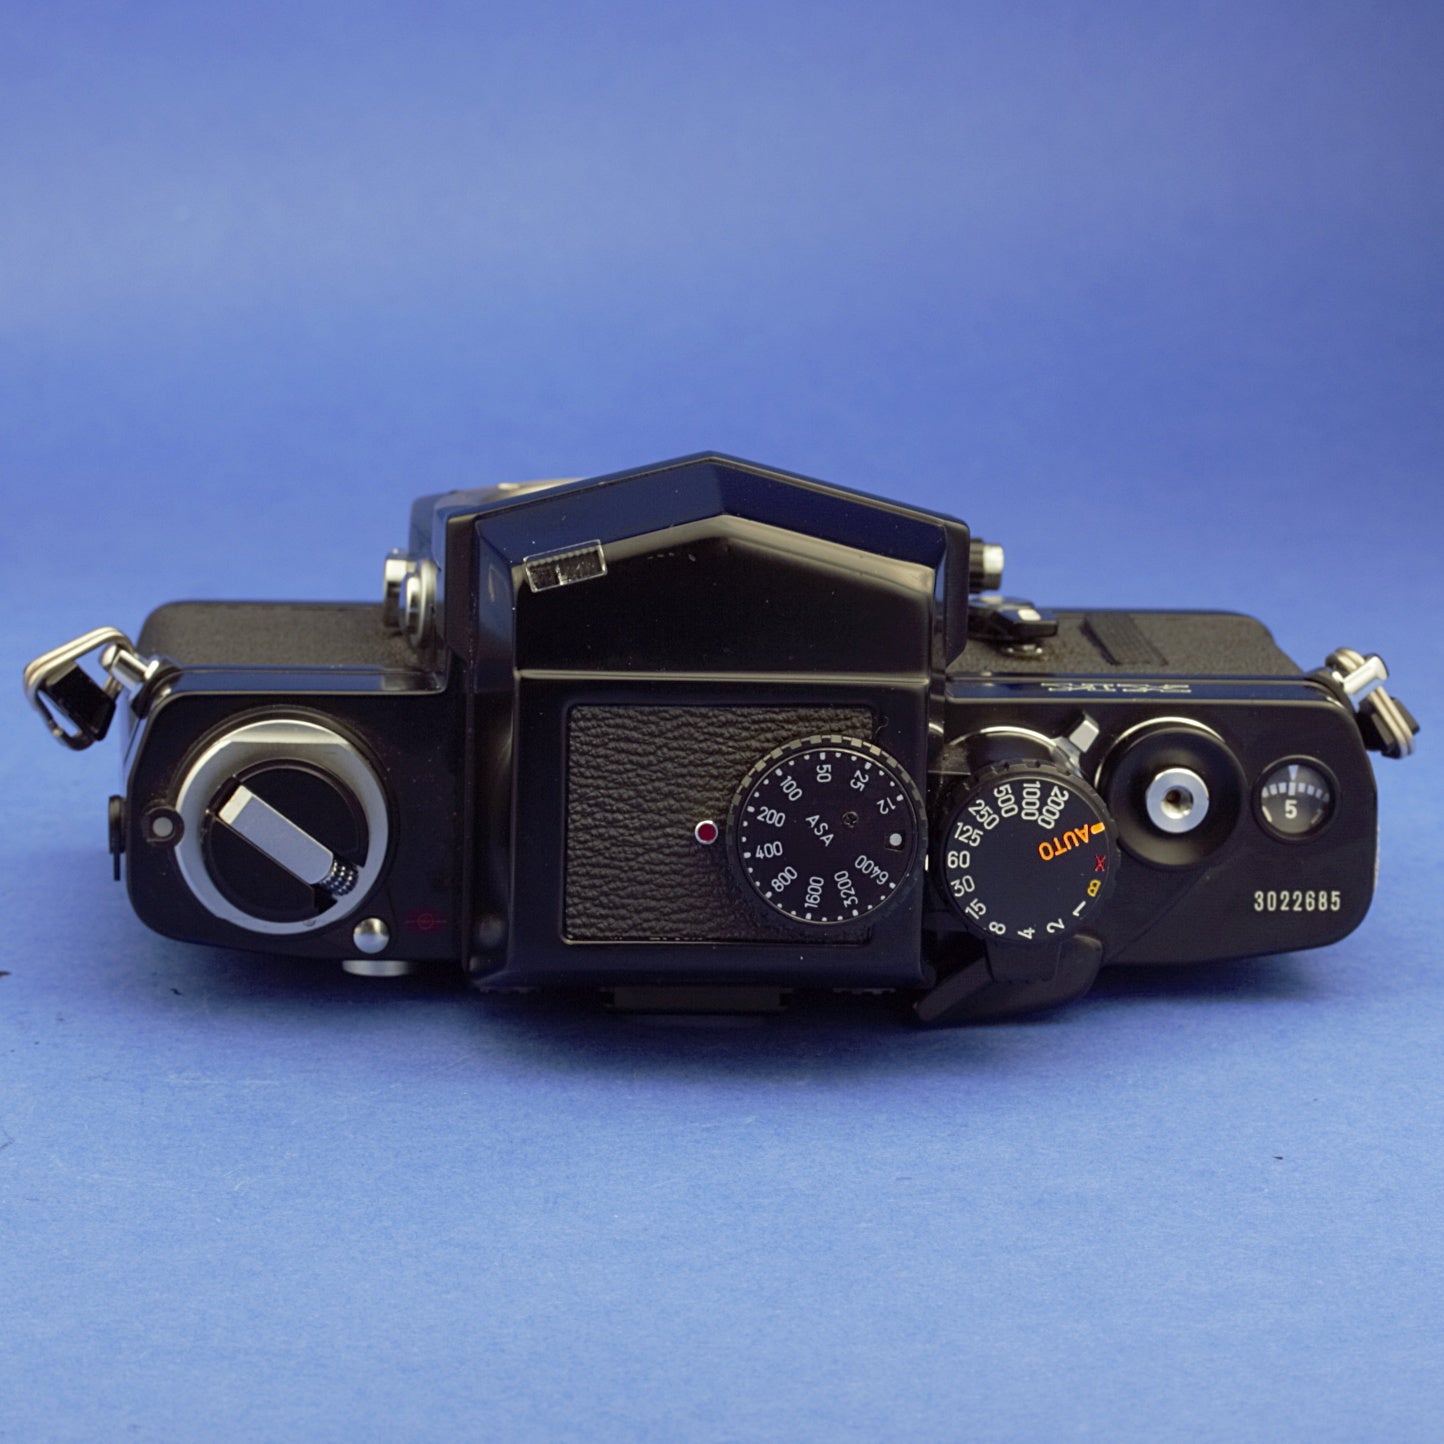 Minolta XK Film Camera Body with AE Finder Beautiful Condition